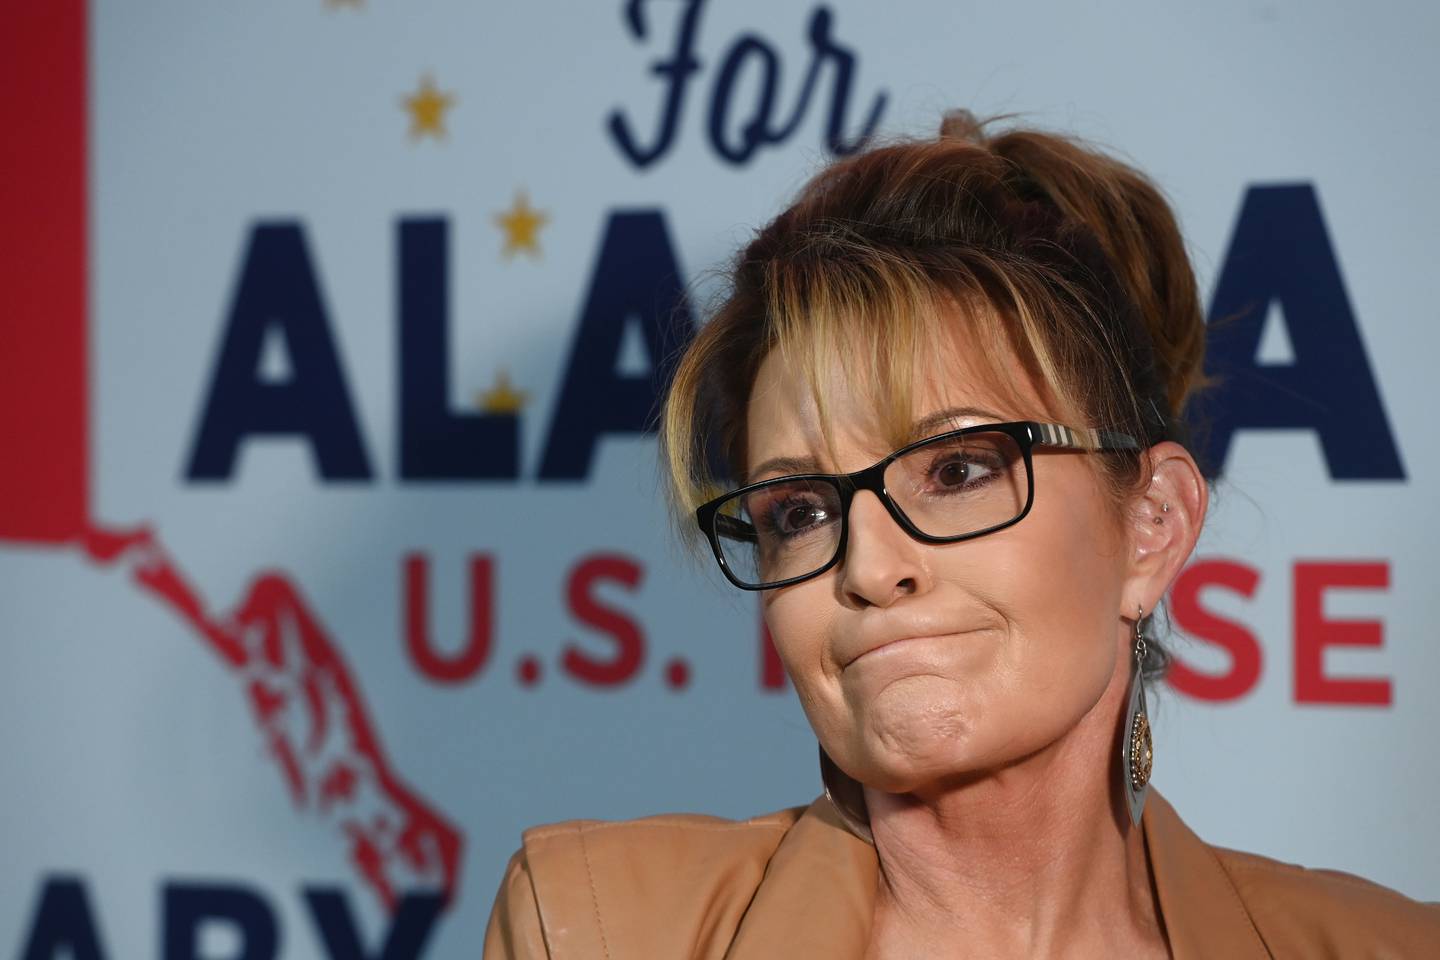 U.S. House candidate Sarah Palin